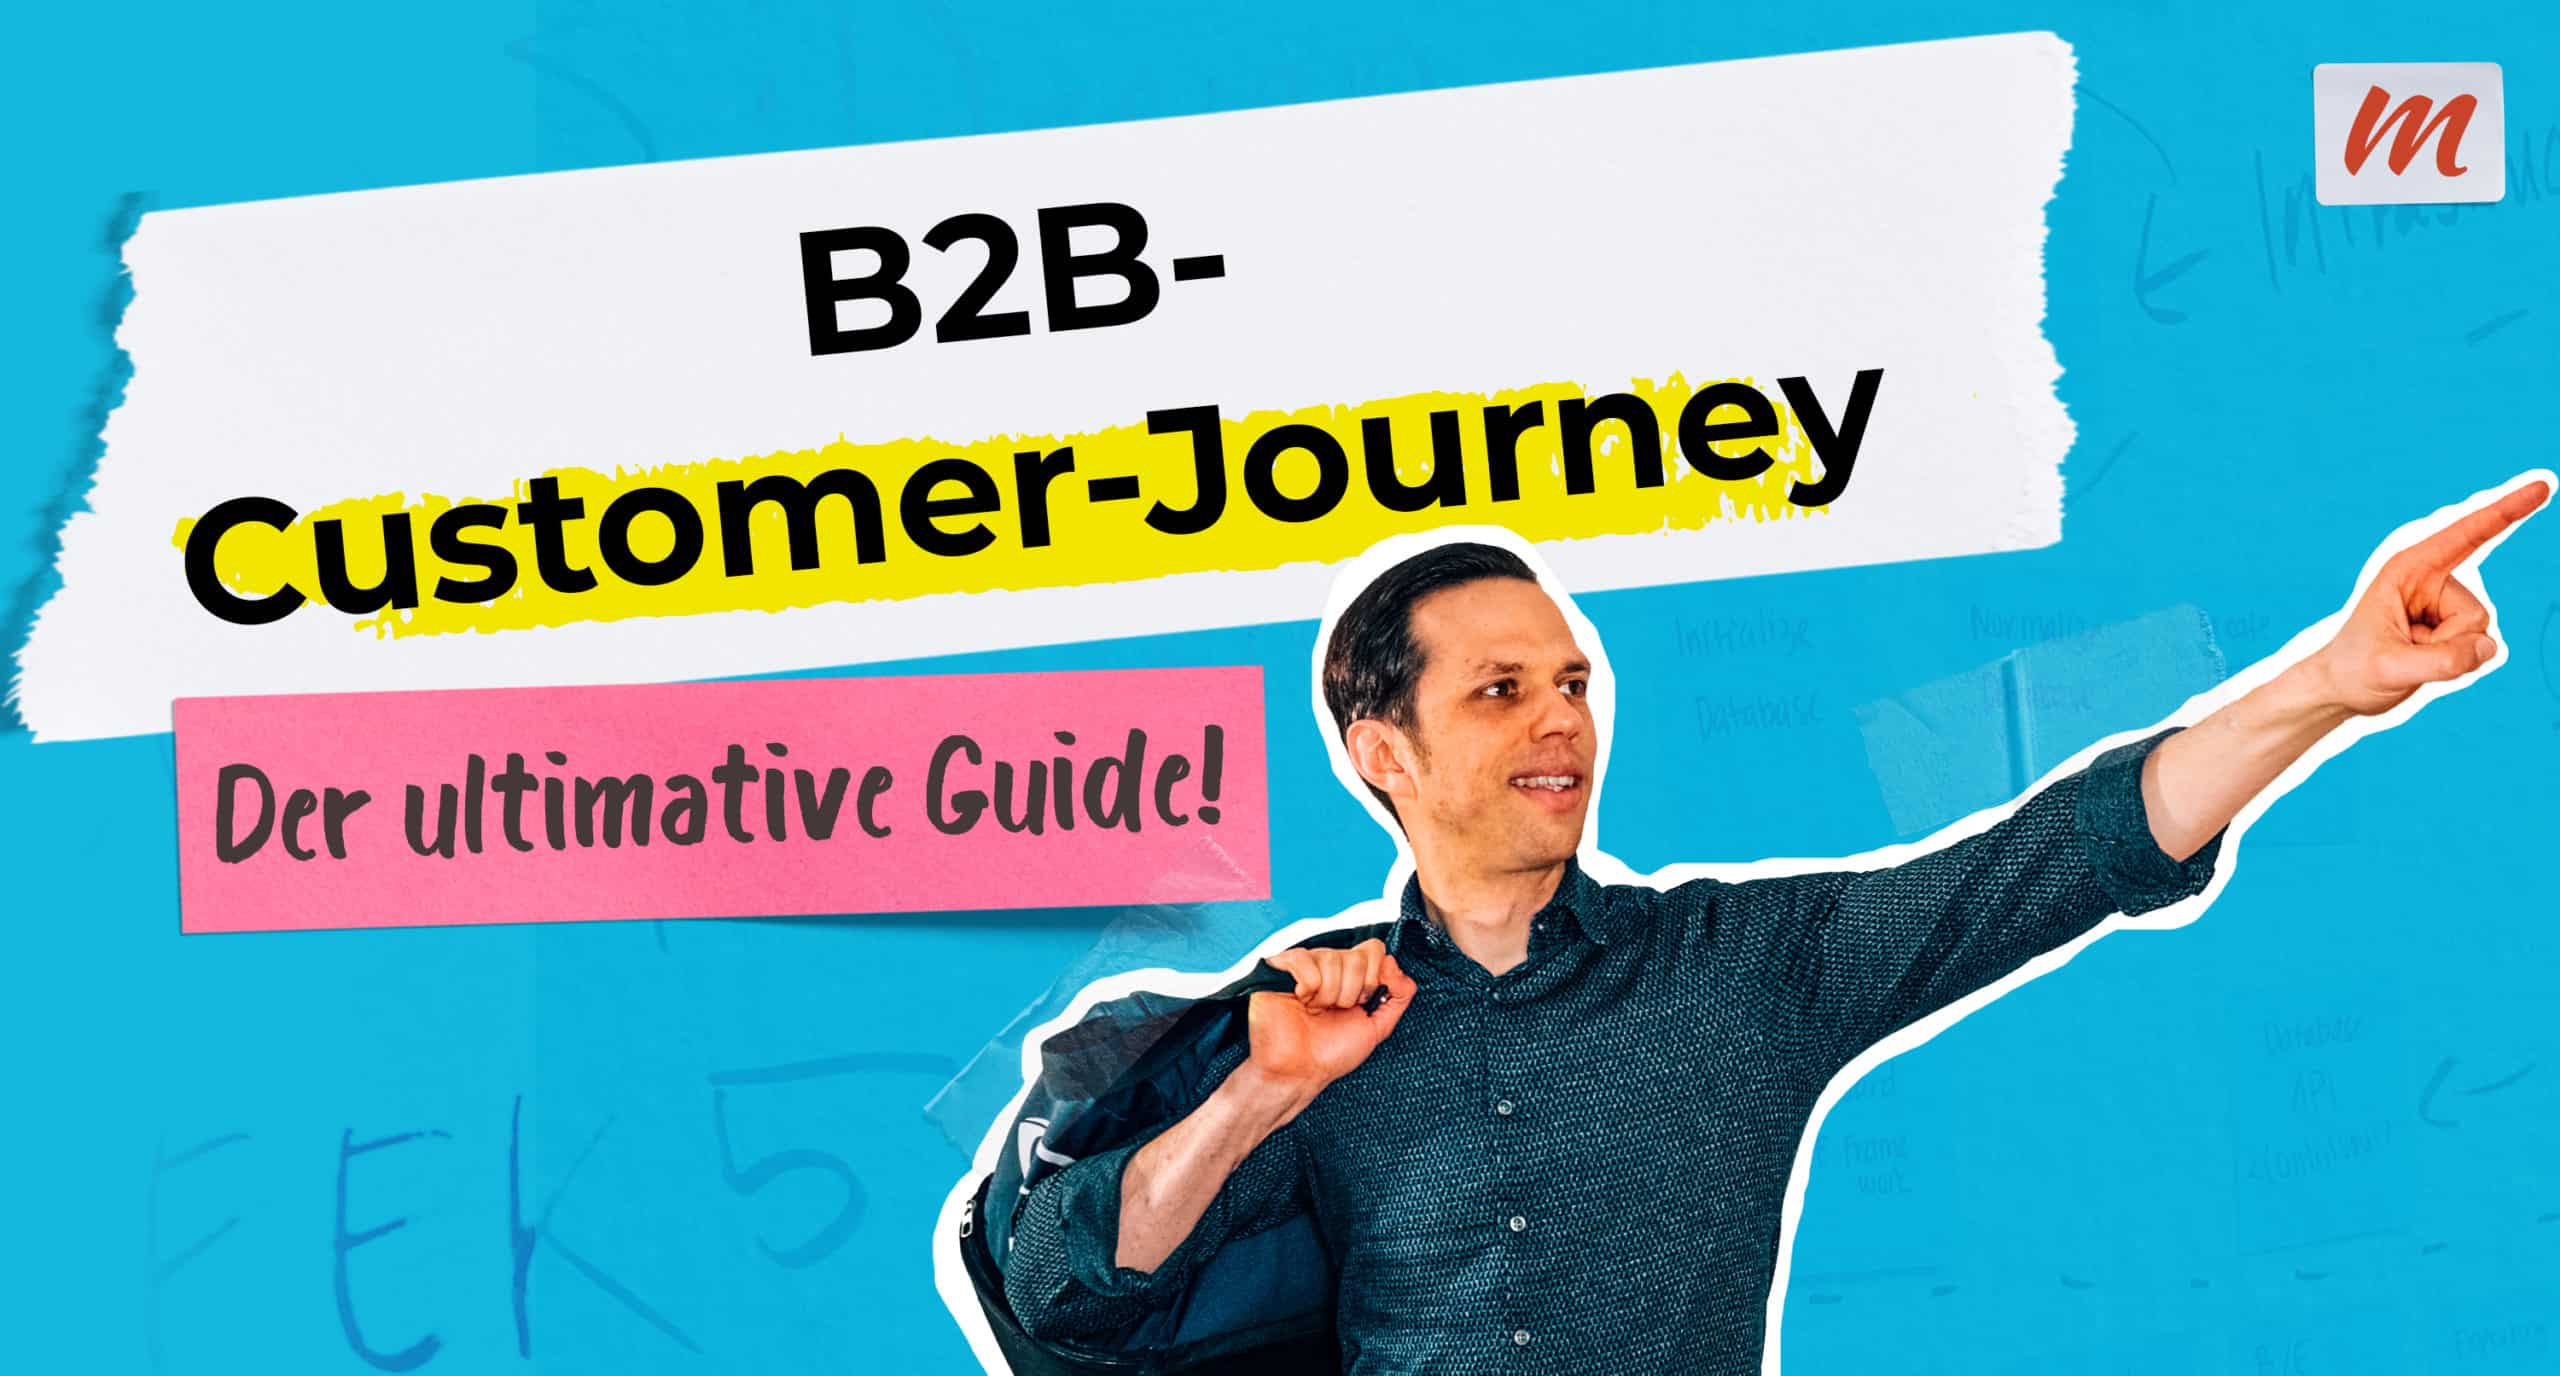 B2B-Customer-Journey: Der ultimative Guide fürs Marketing